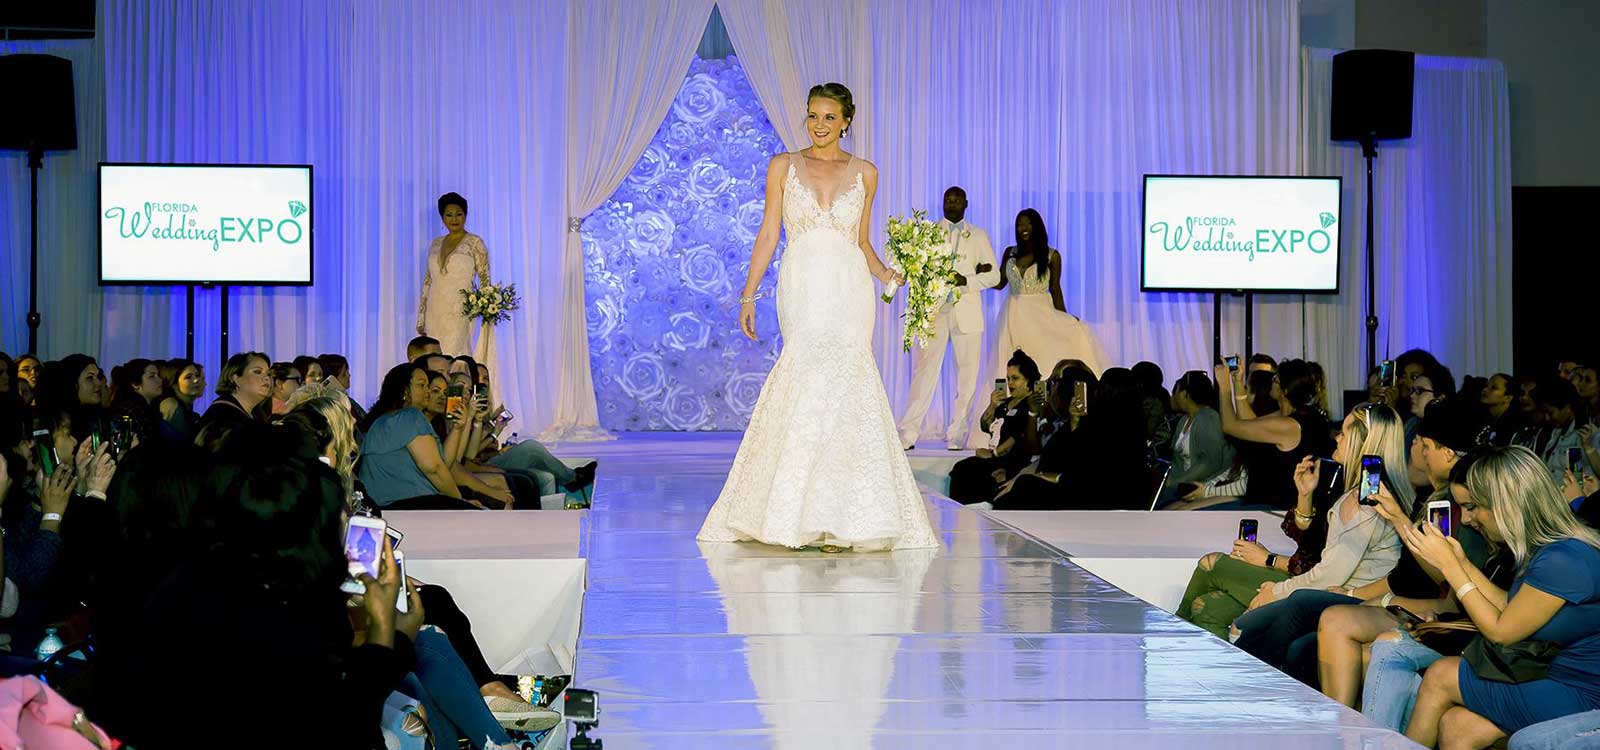 Model walking down runway in wedding dress at the Florida Wedding Expo wedding show